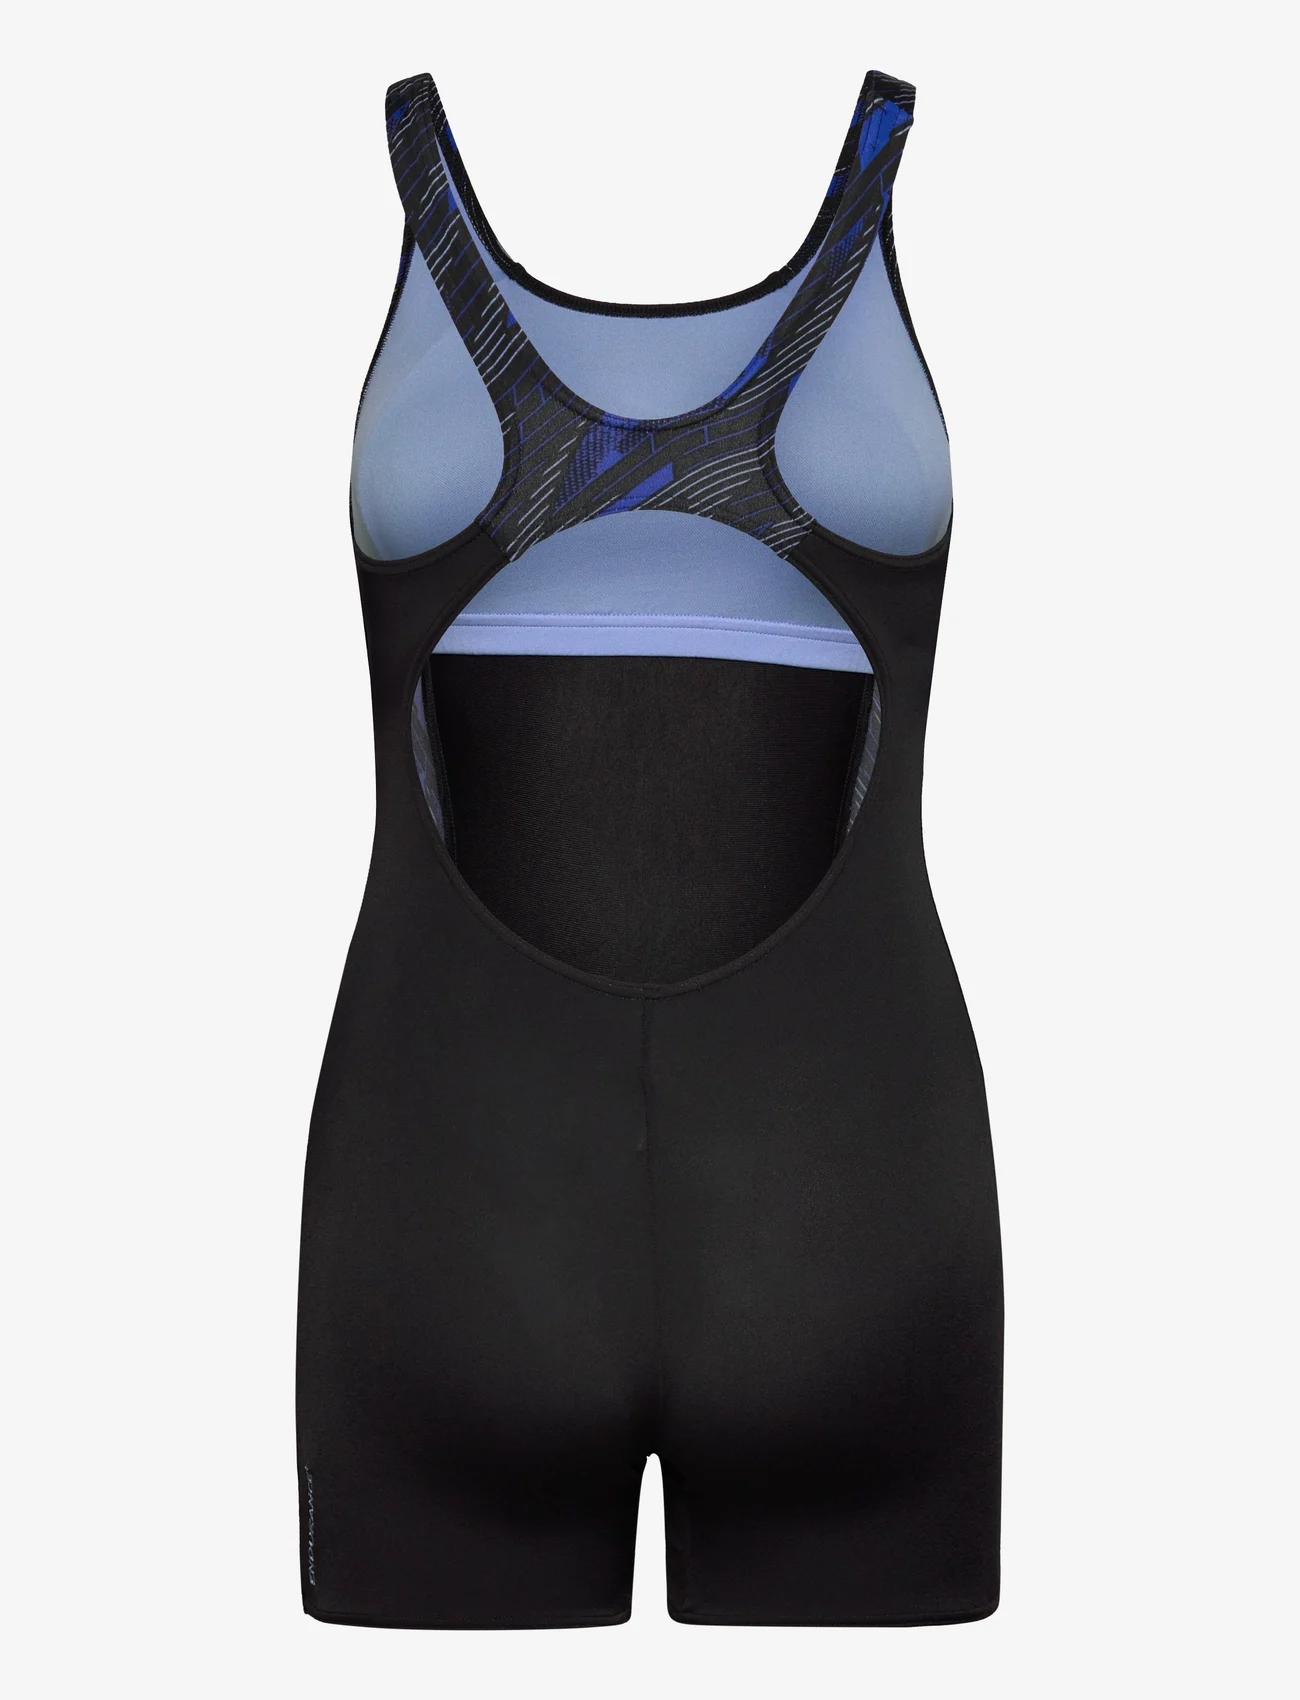 Speedo - Womens HyperBoom Splice Legsuit - badeanzüge - black/blue - 1